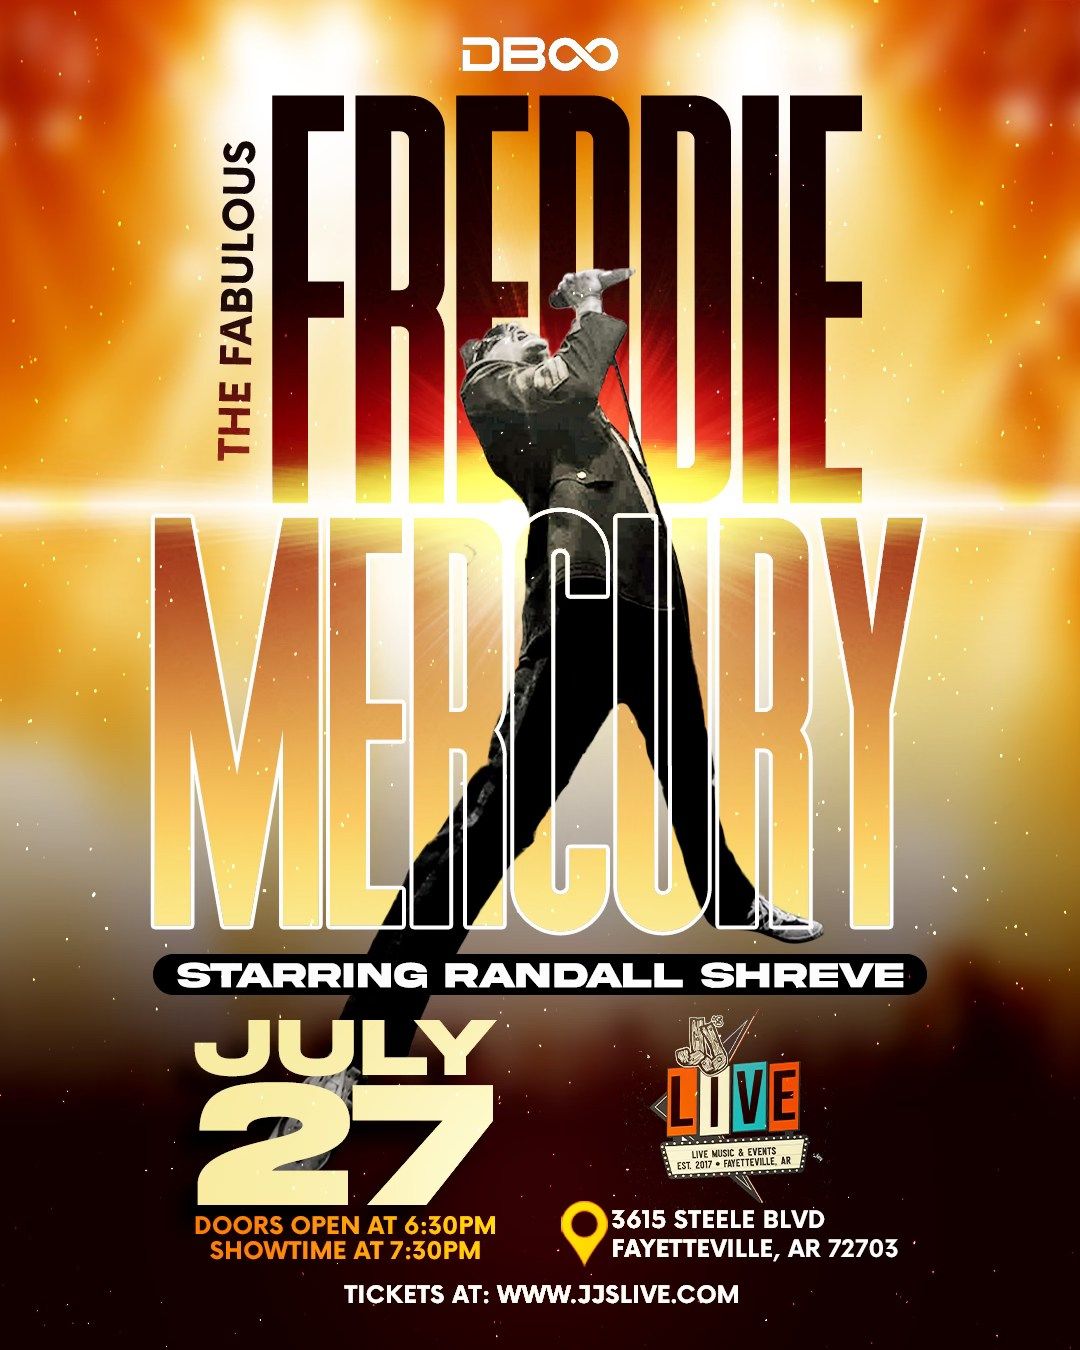 The FABULOUS Freddie Mercury Tribute starring RANDALL SHREVE!